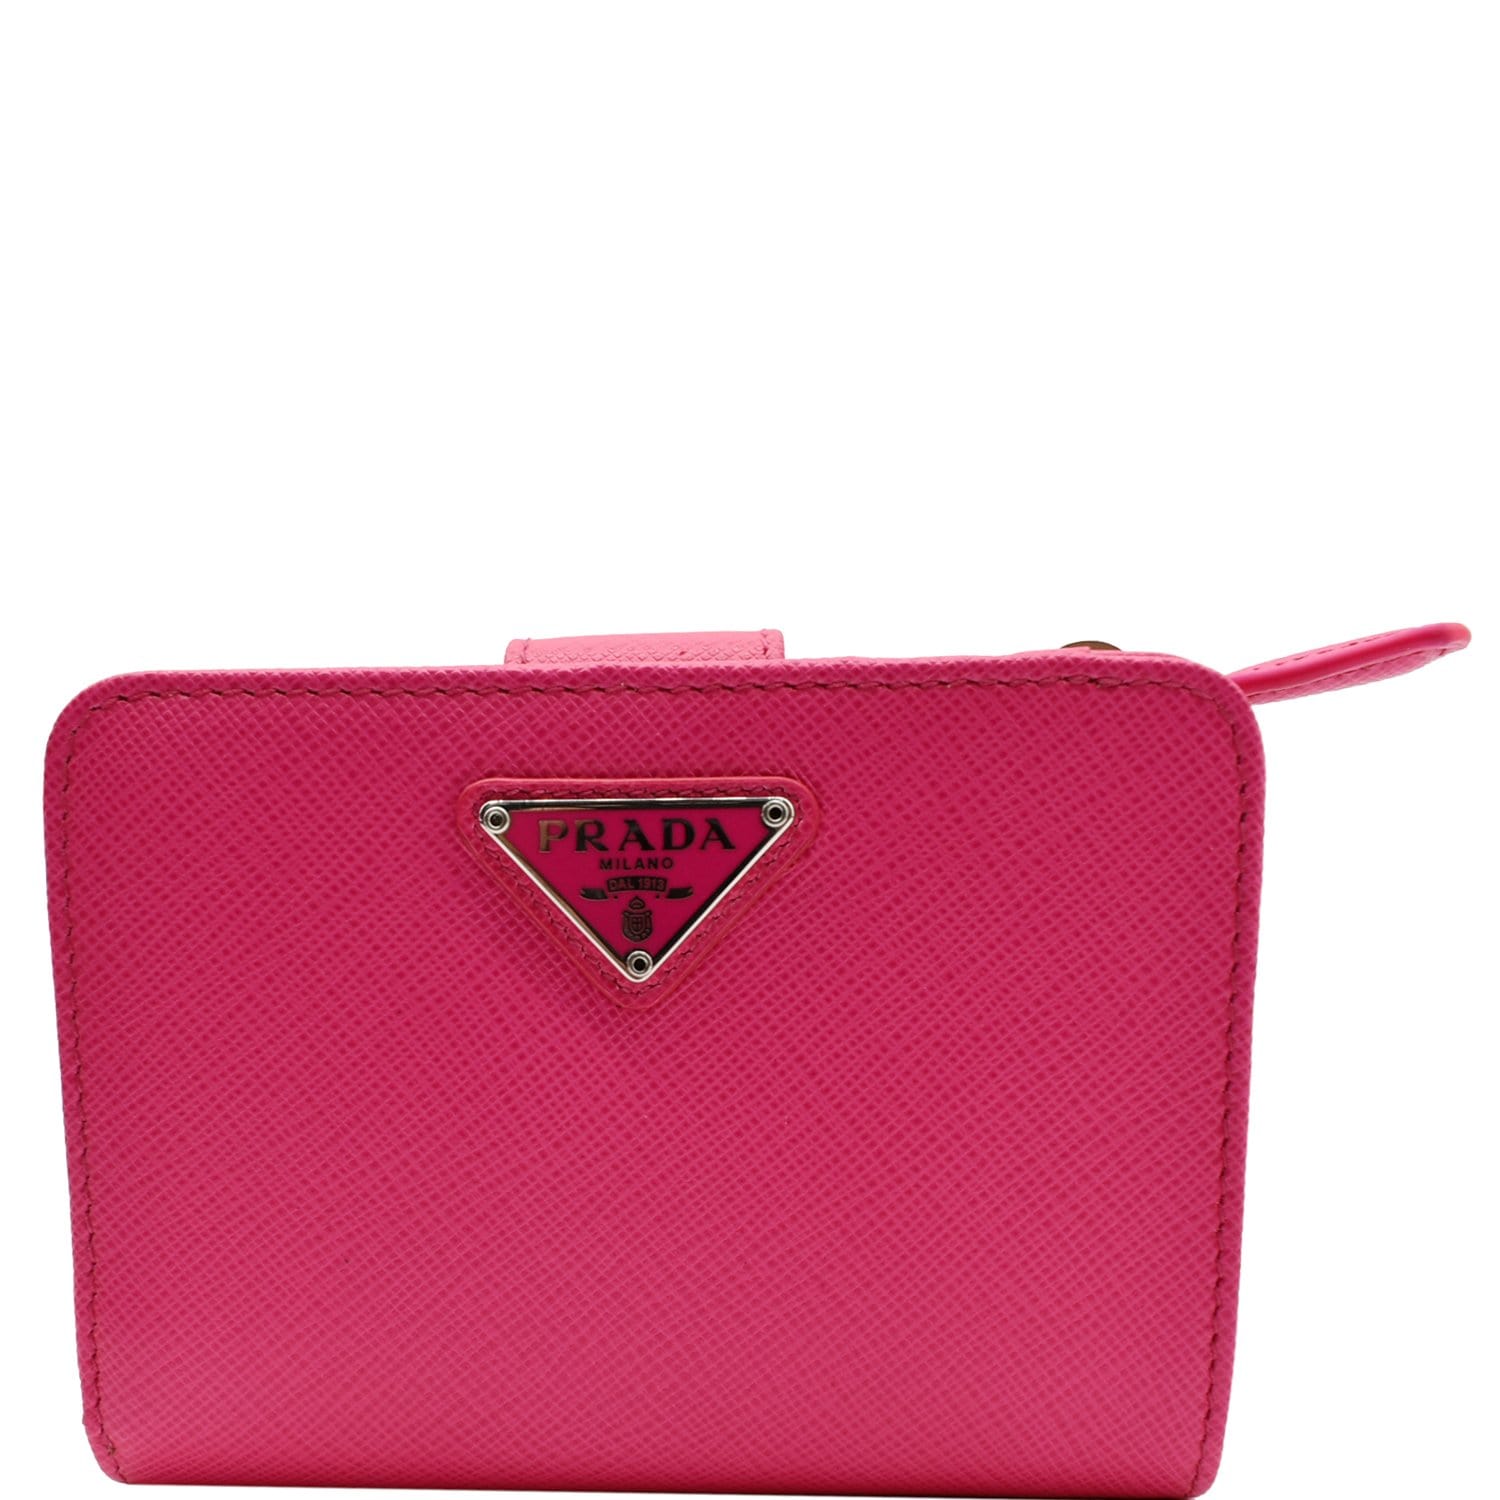 Authentic PRADA purse pink leather Authentic T17226 | eBay